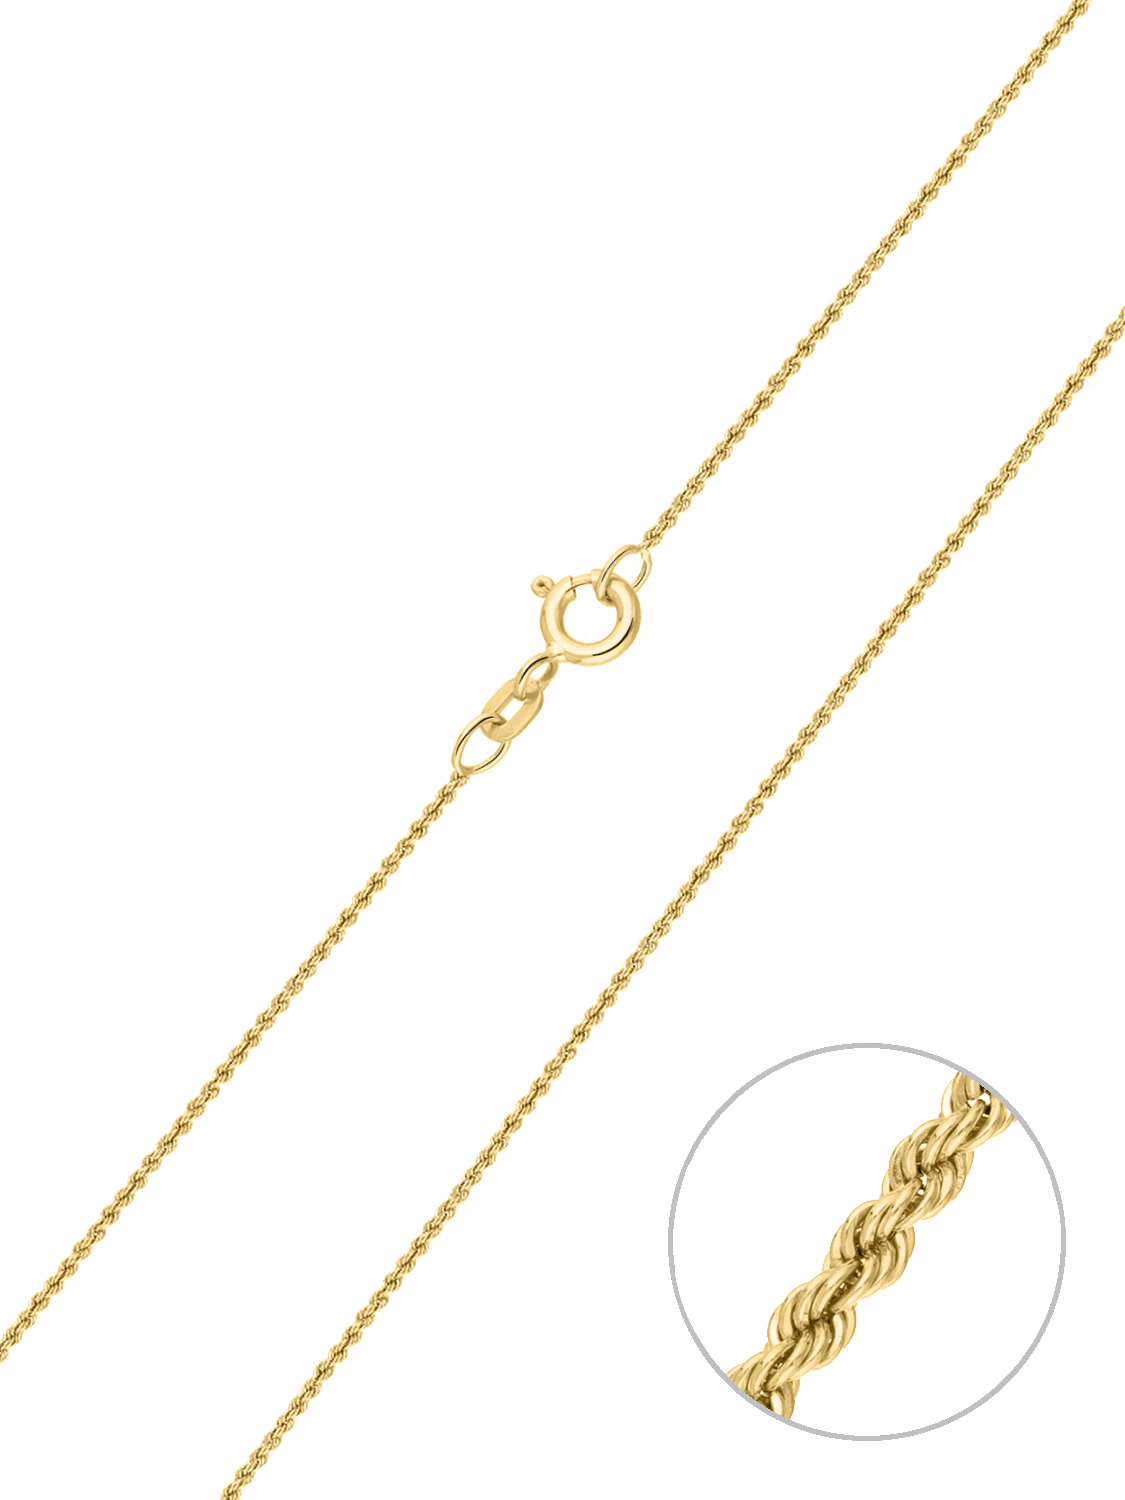 Dalmatia - Halskette 333 Gold Federring - Breite 1,4 mm - Länge 50 cm